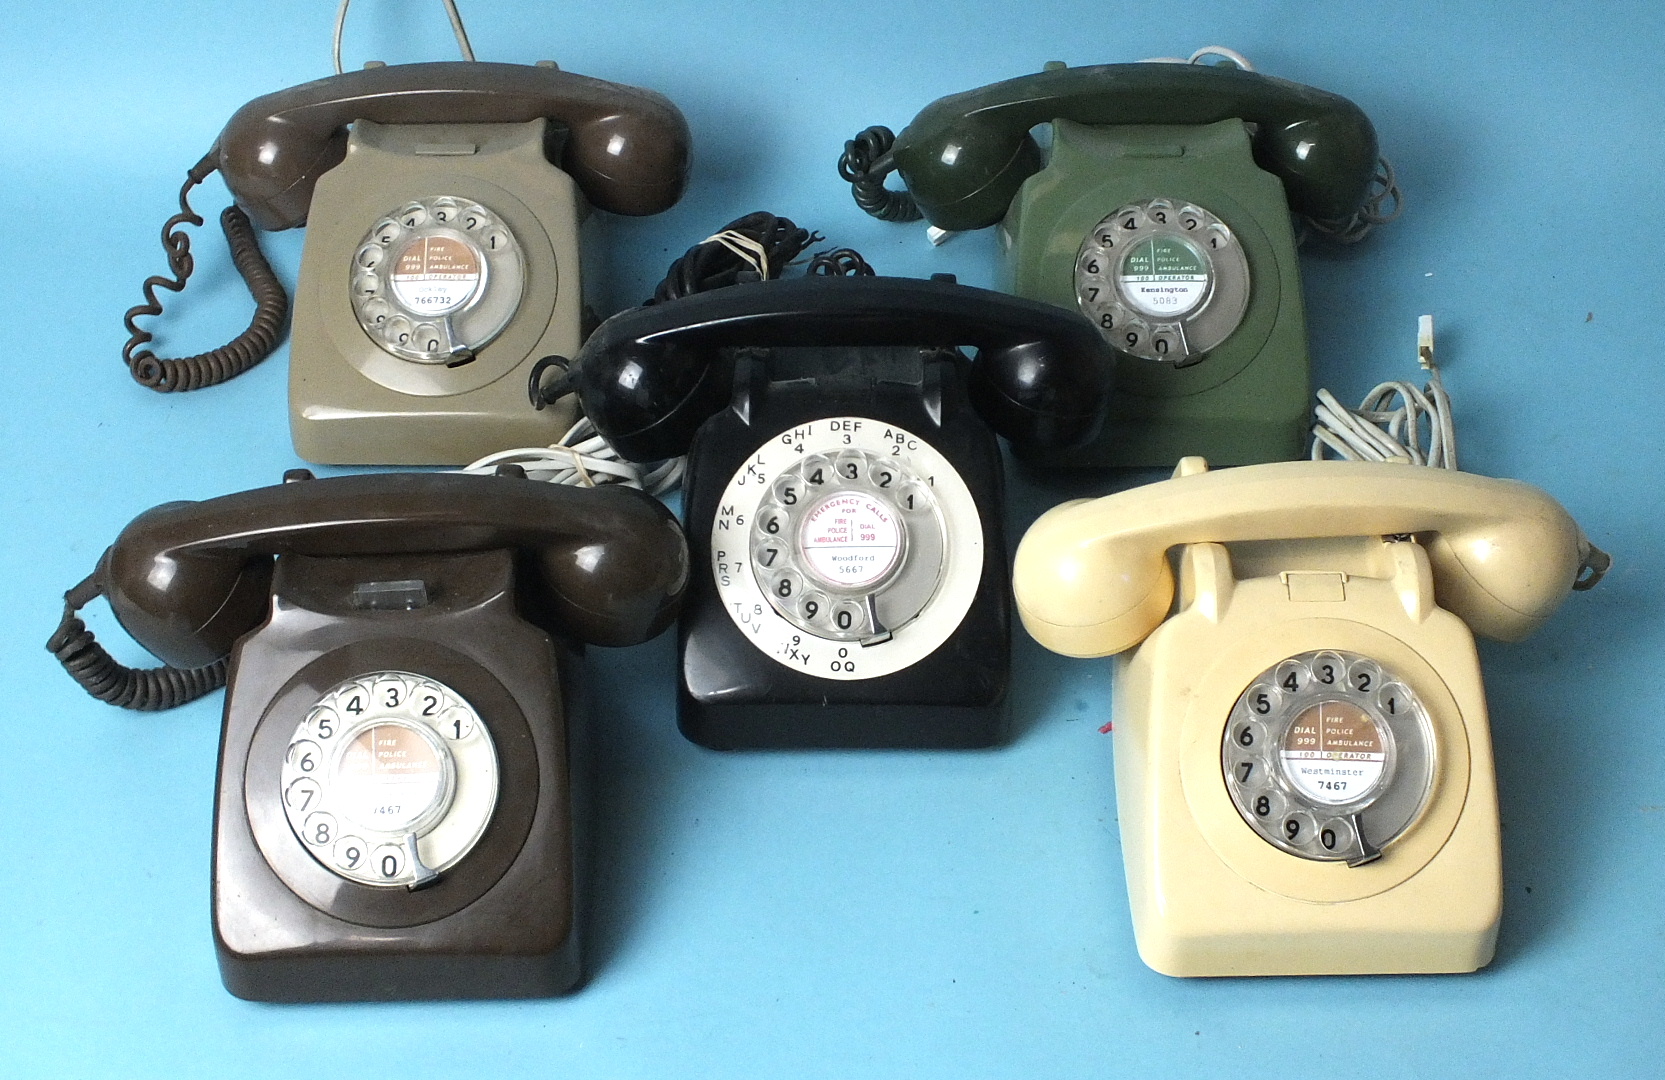 Five British Telecom plastic telephones, (5).